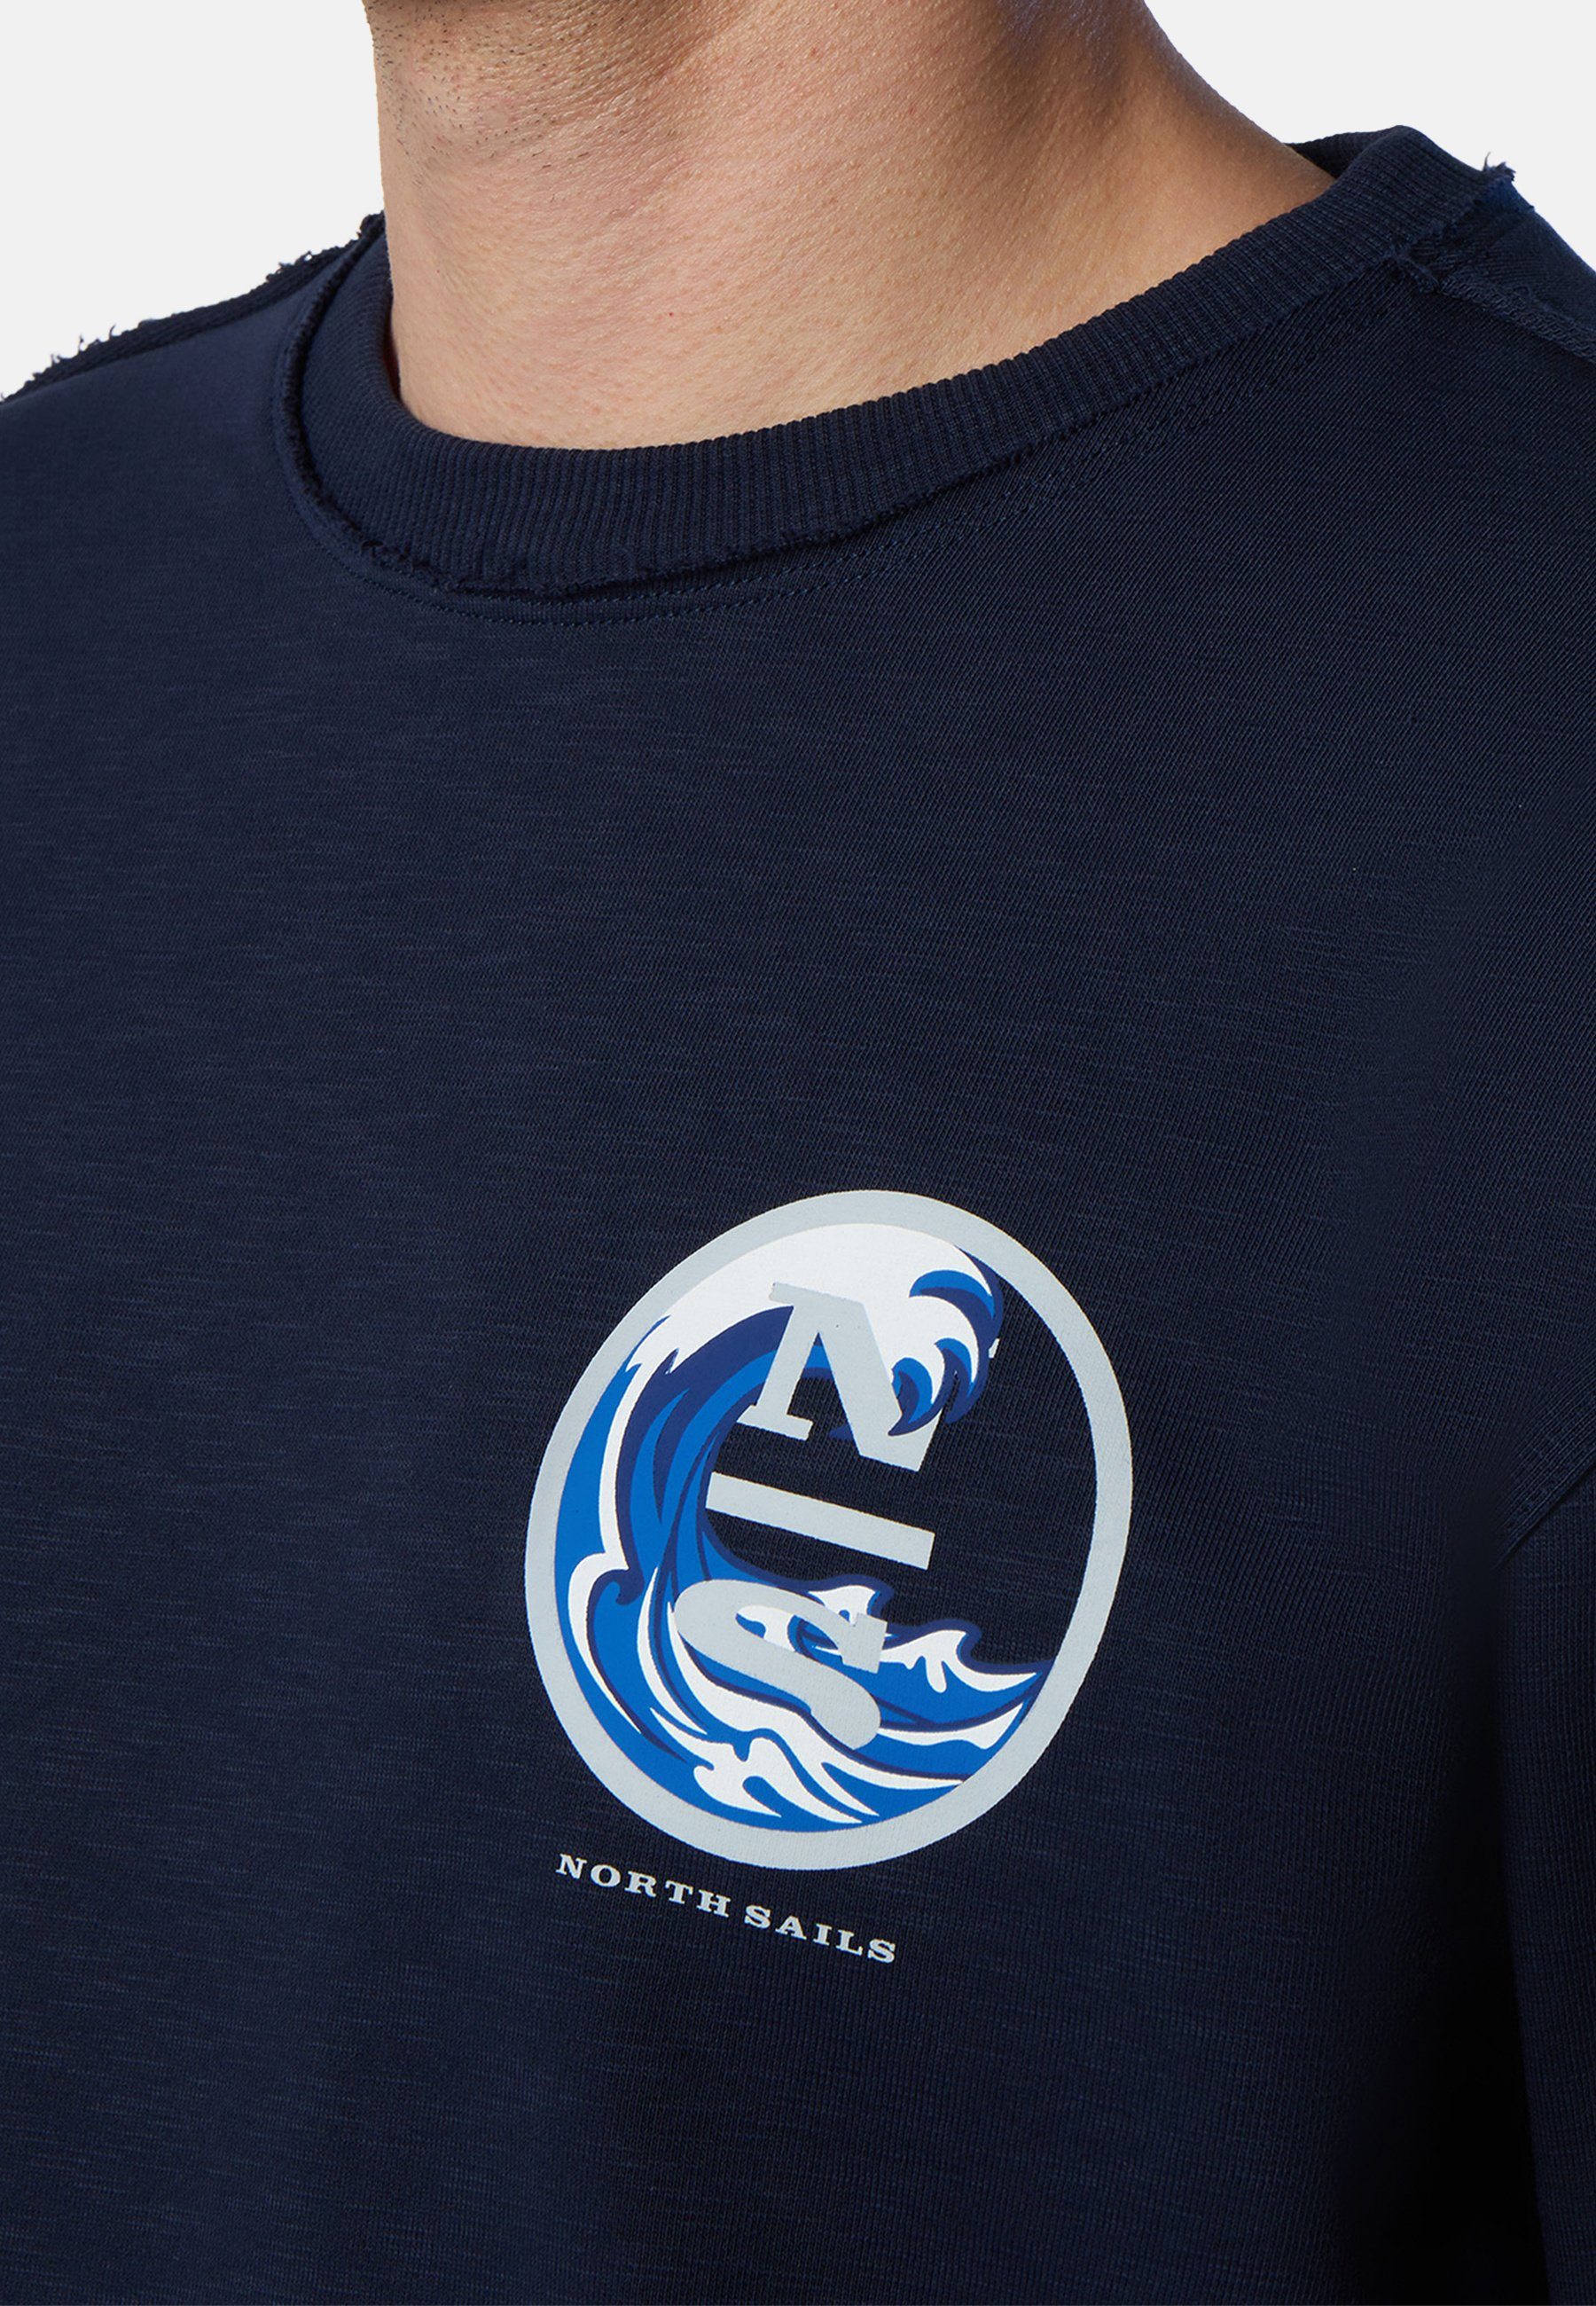 Sweatshirt Grafik-Print Fleecepullover mit BLUE North Sails